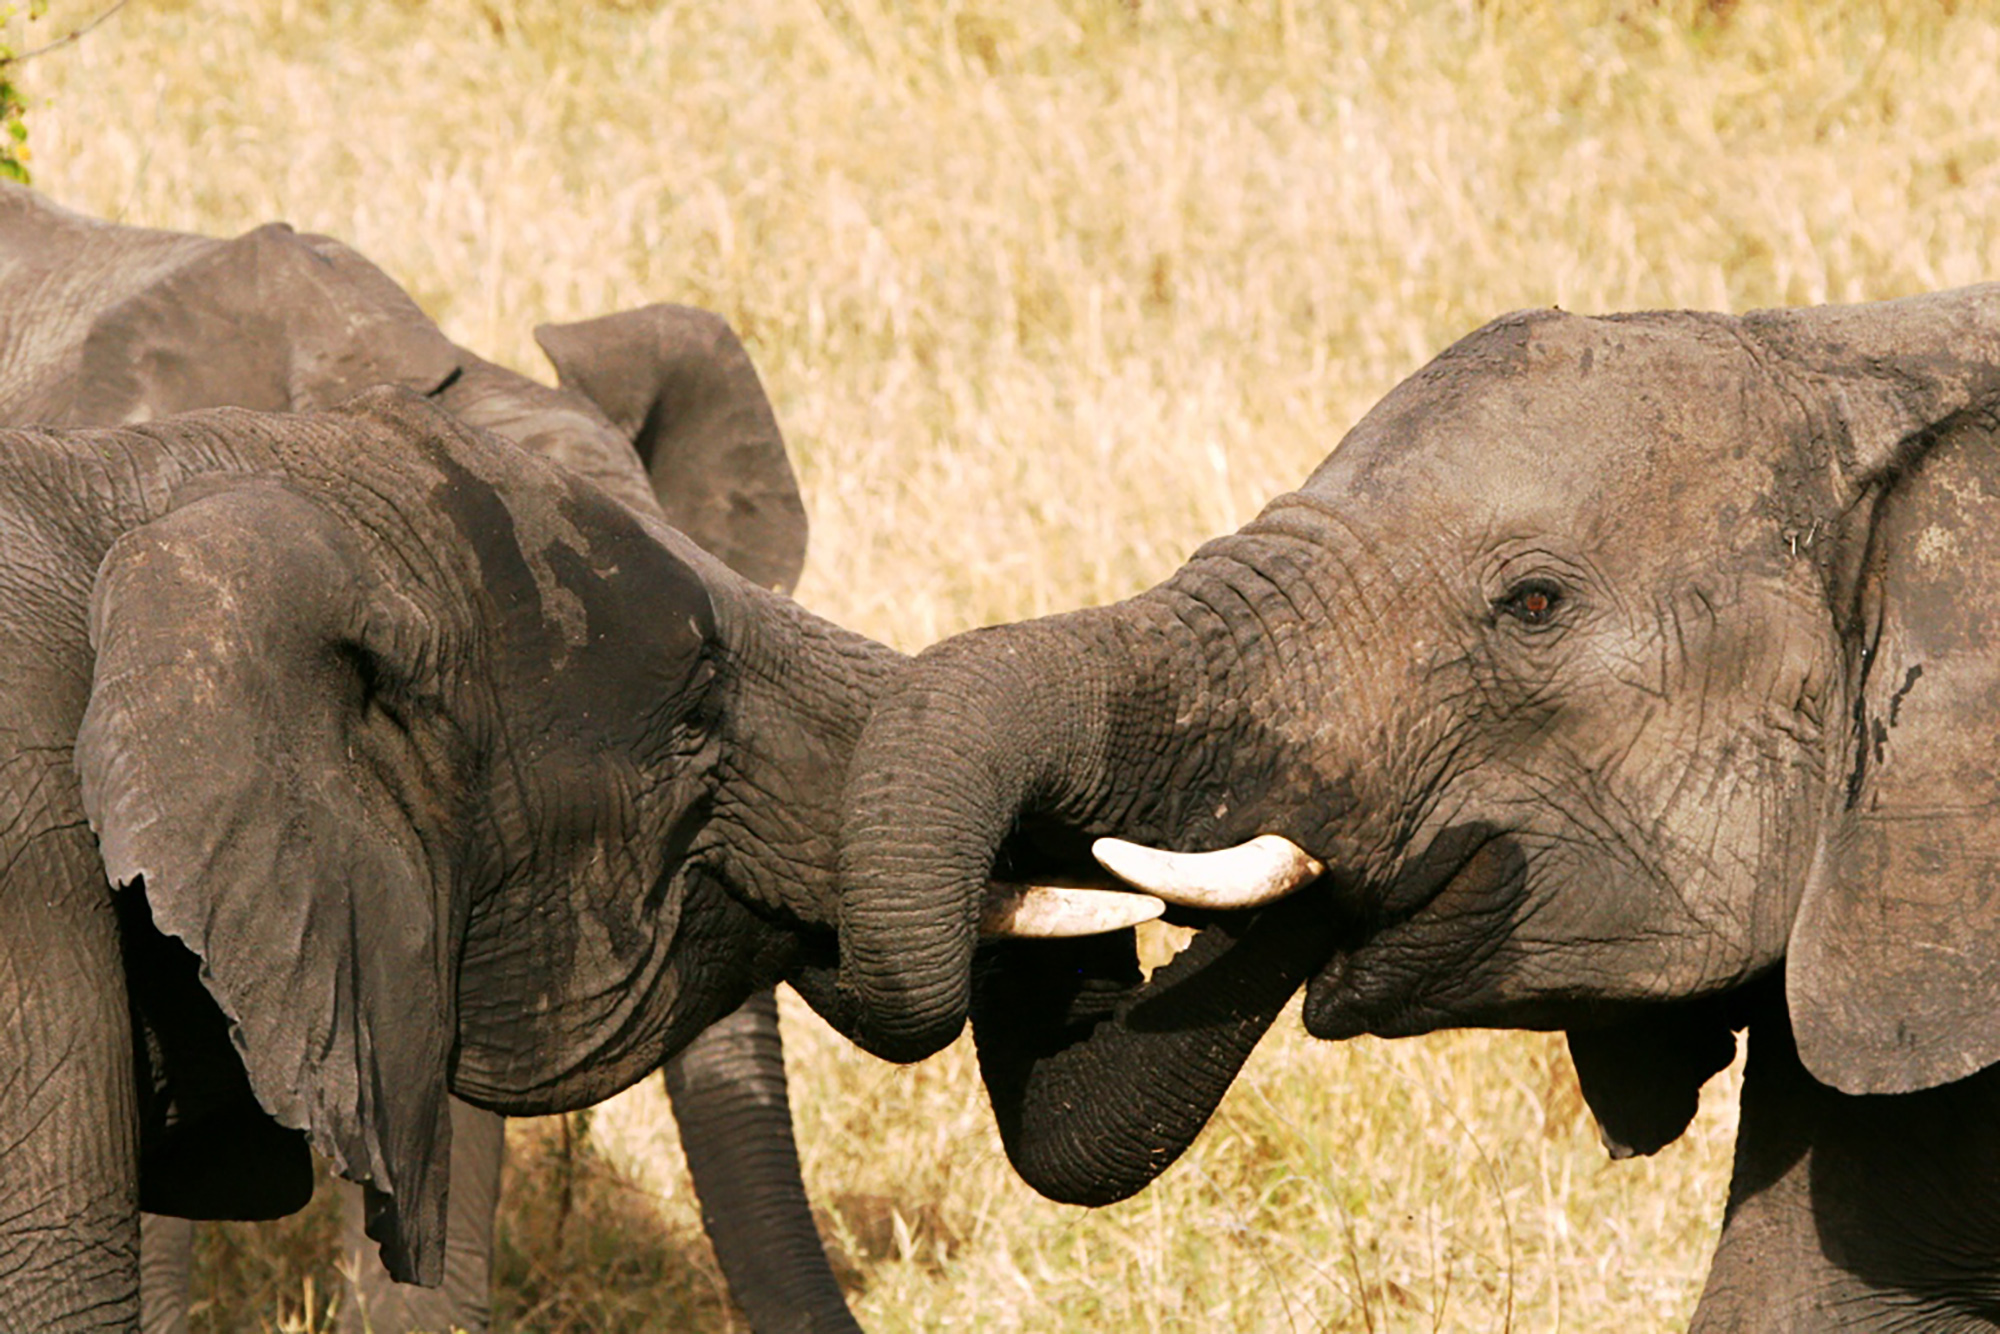 britian ivory trade ban